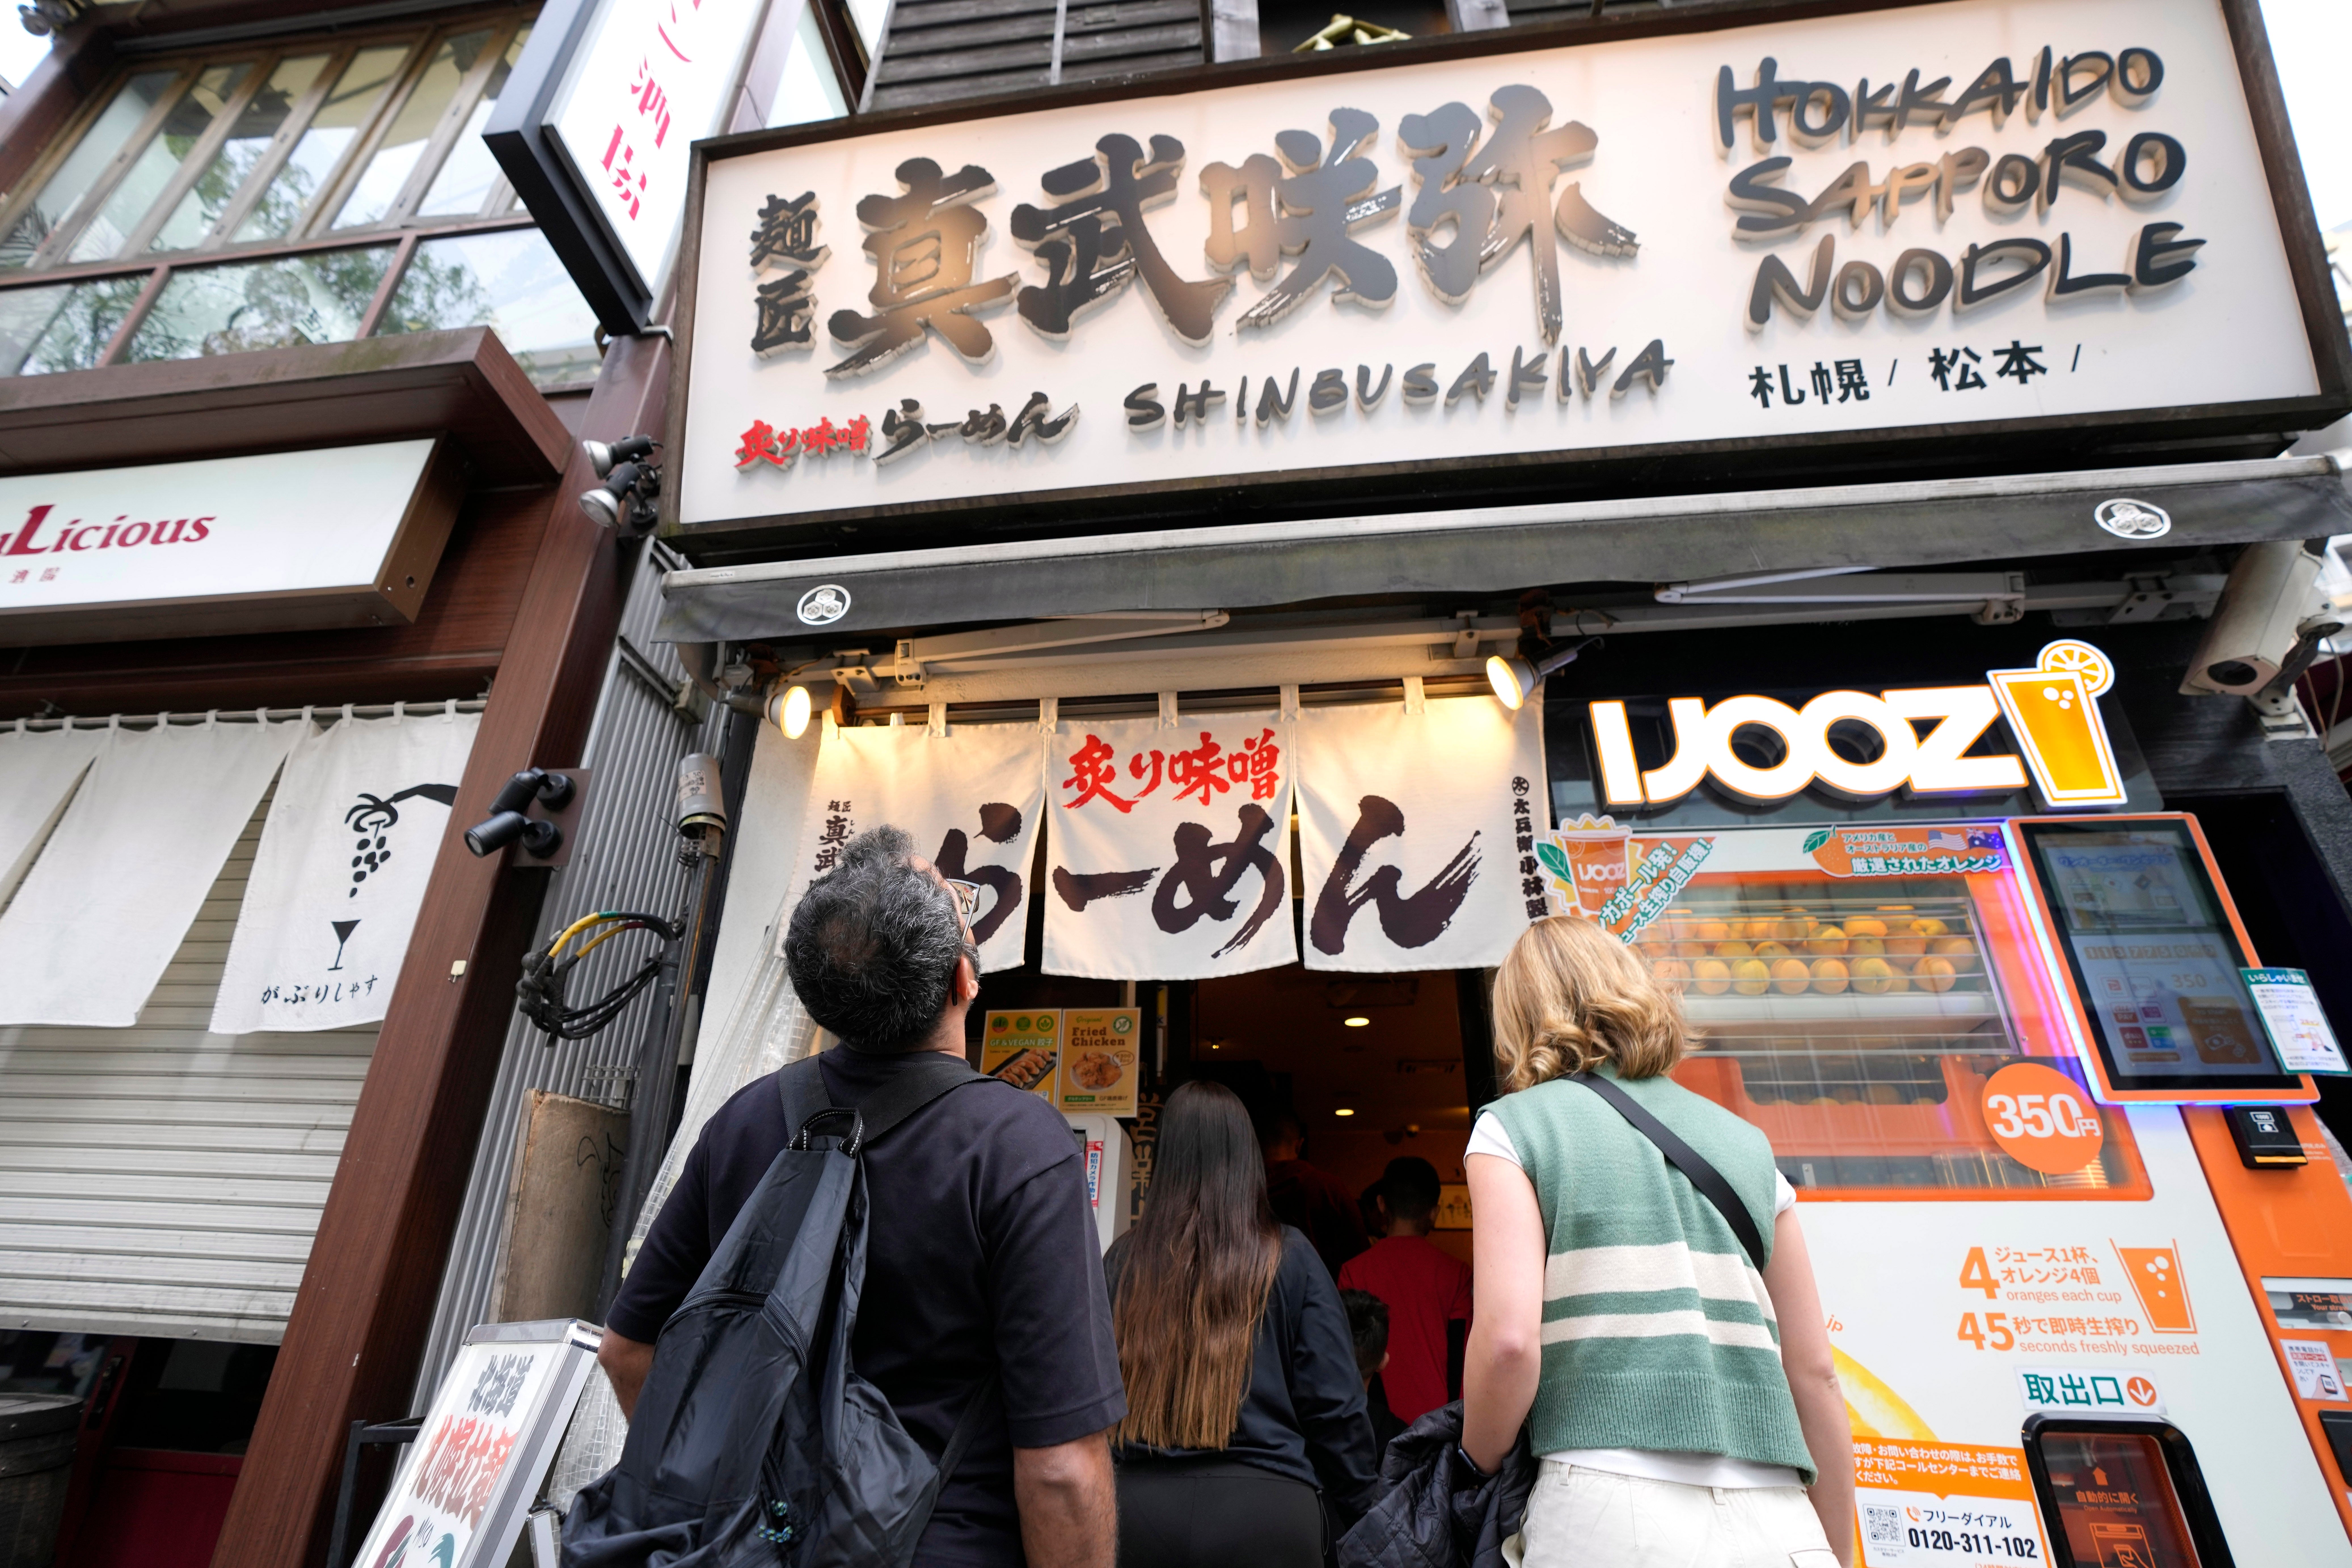 Participants of Tokyo Ramen Tours enter Shinbusakiya, a ramen shop which offers ‘Hokkaido classics’ at Shibuya district